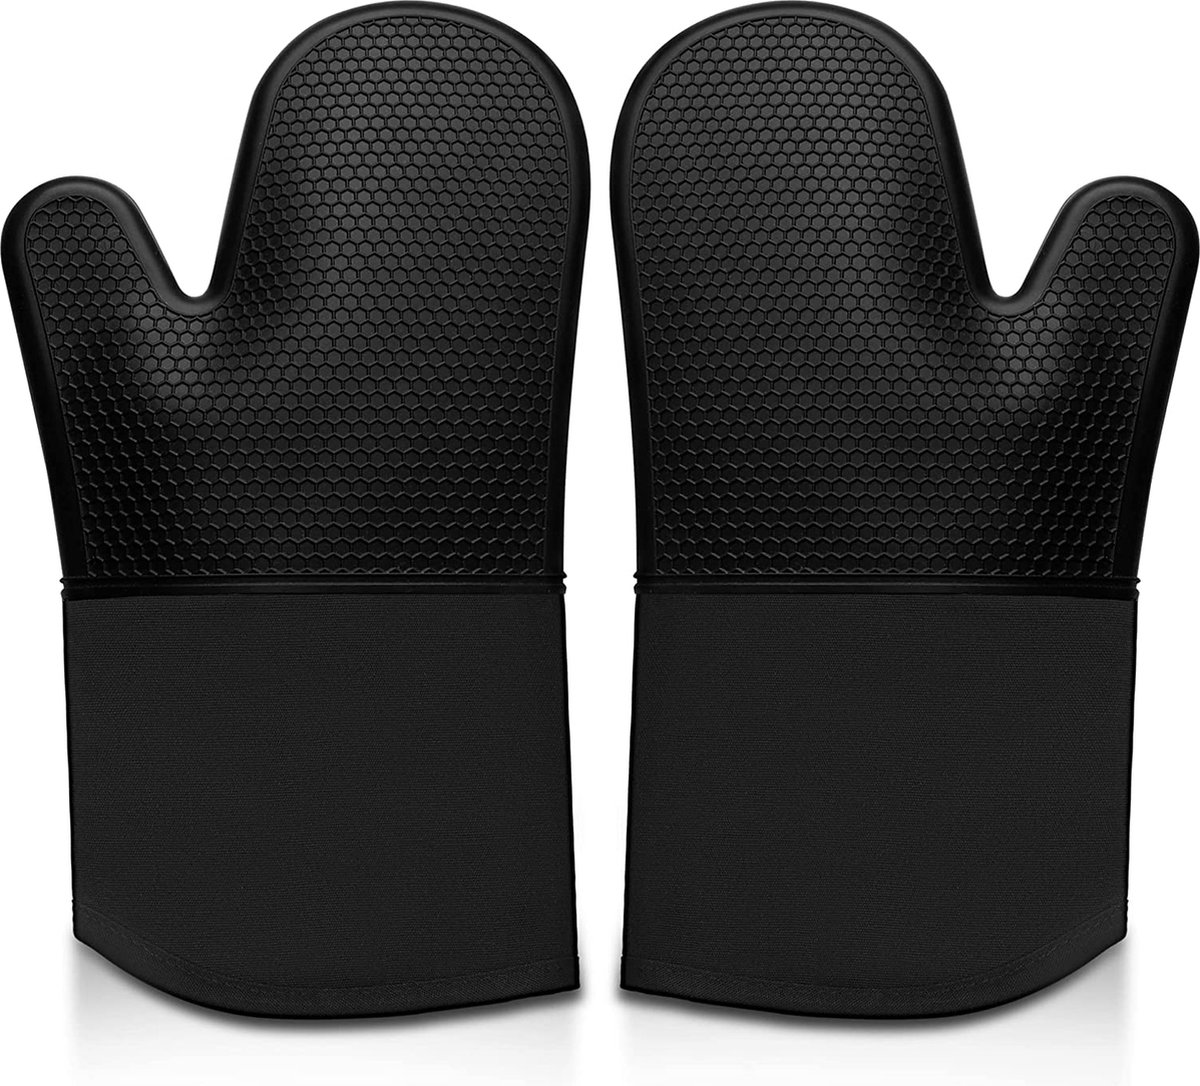 Luxe ovenwanten set – Keukenhulp Keuken Textiel – Oven Accessiores – Oven Gloves